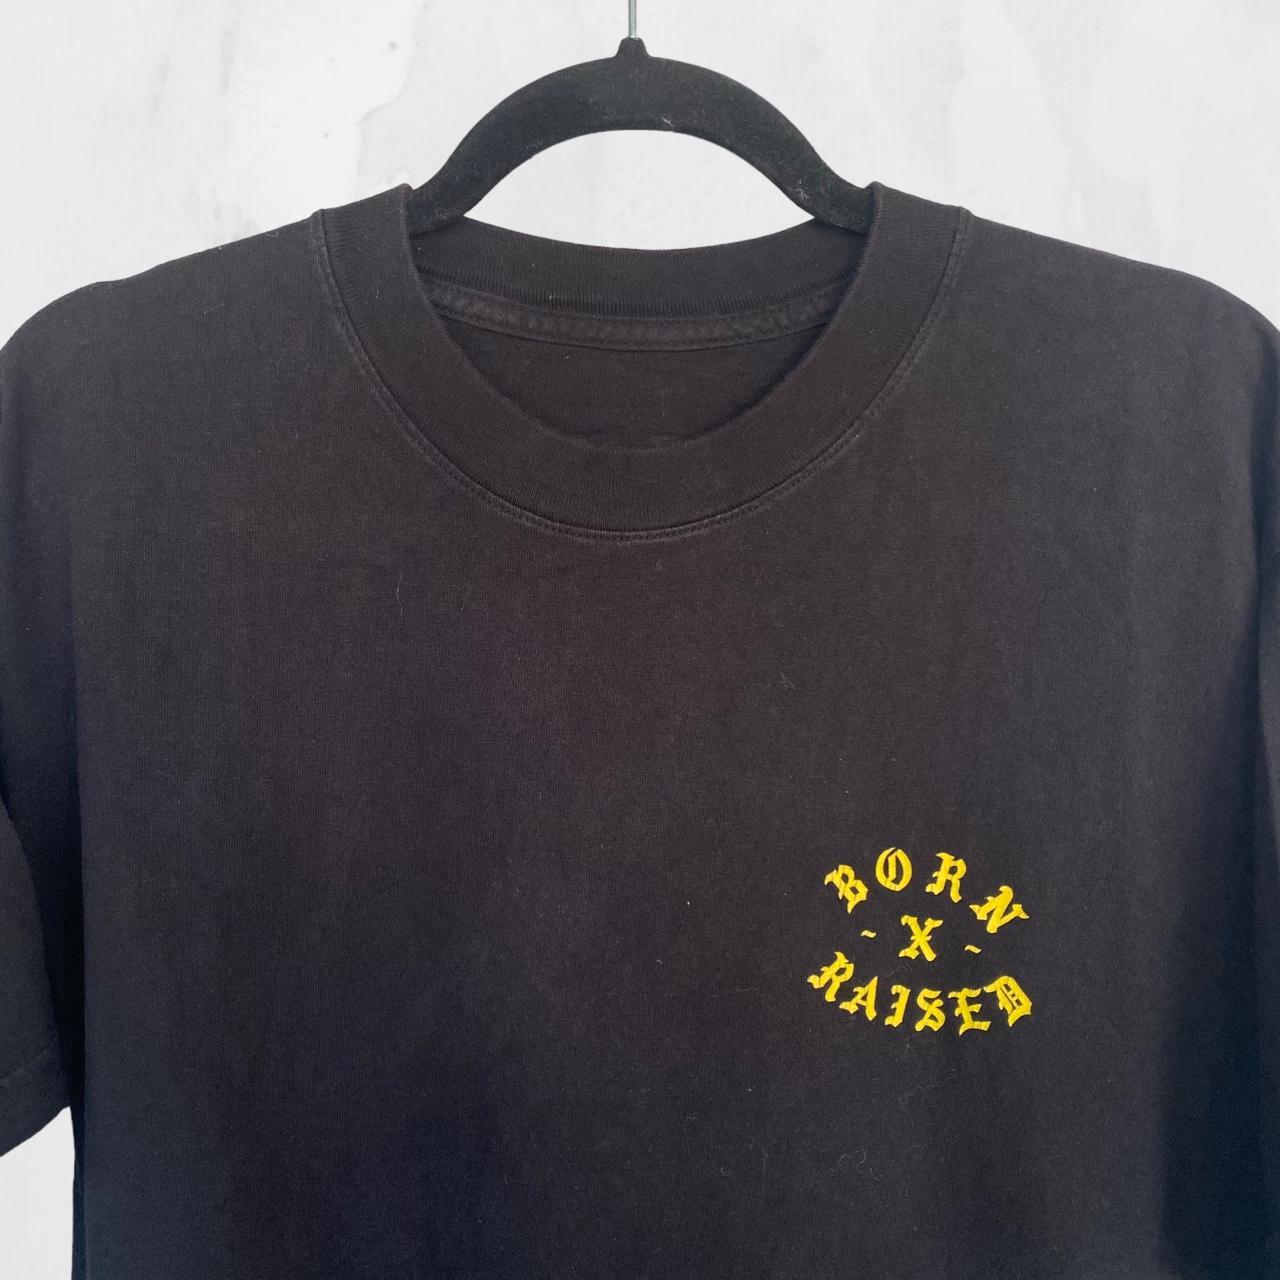 Born x Raised Men's Black and Yellow T-shirt (5)